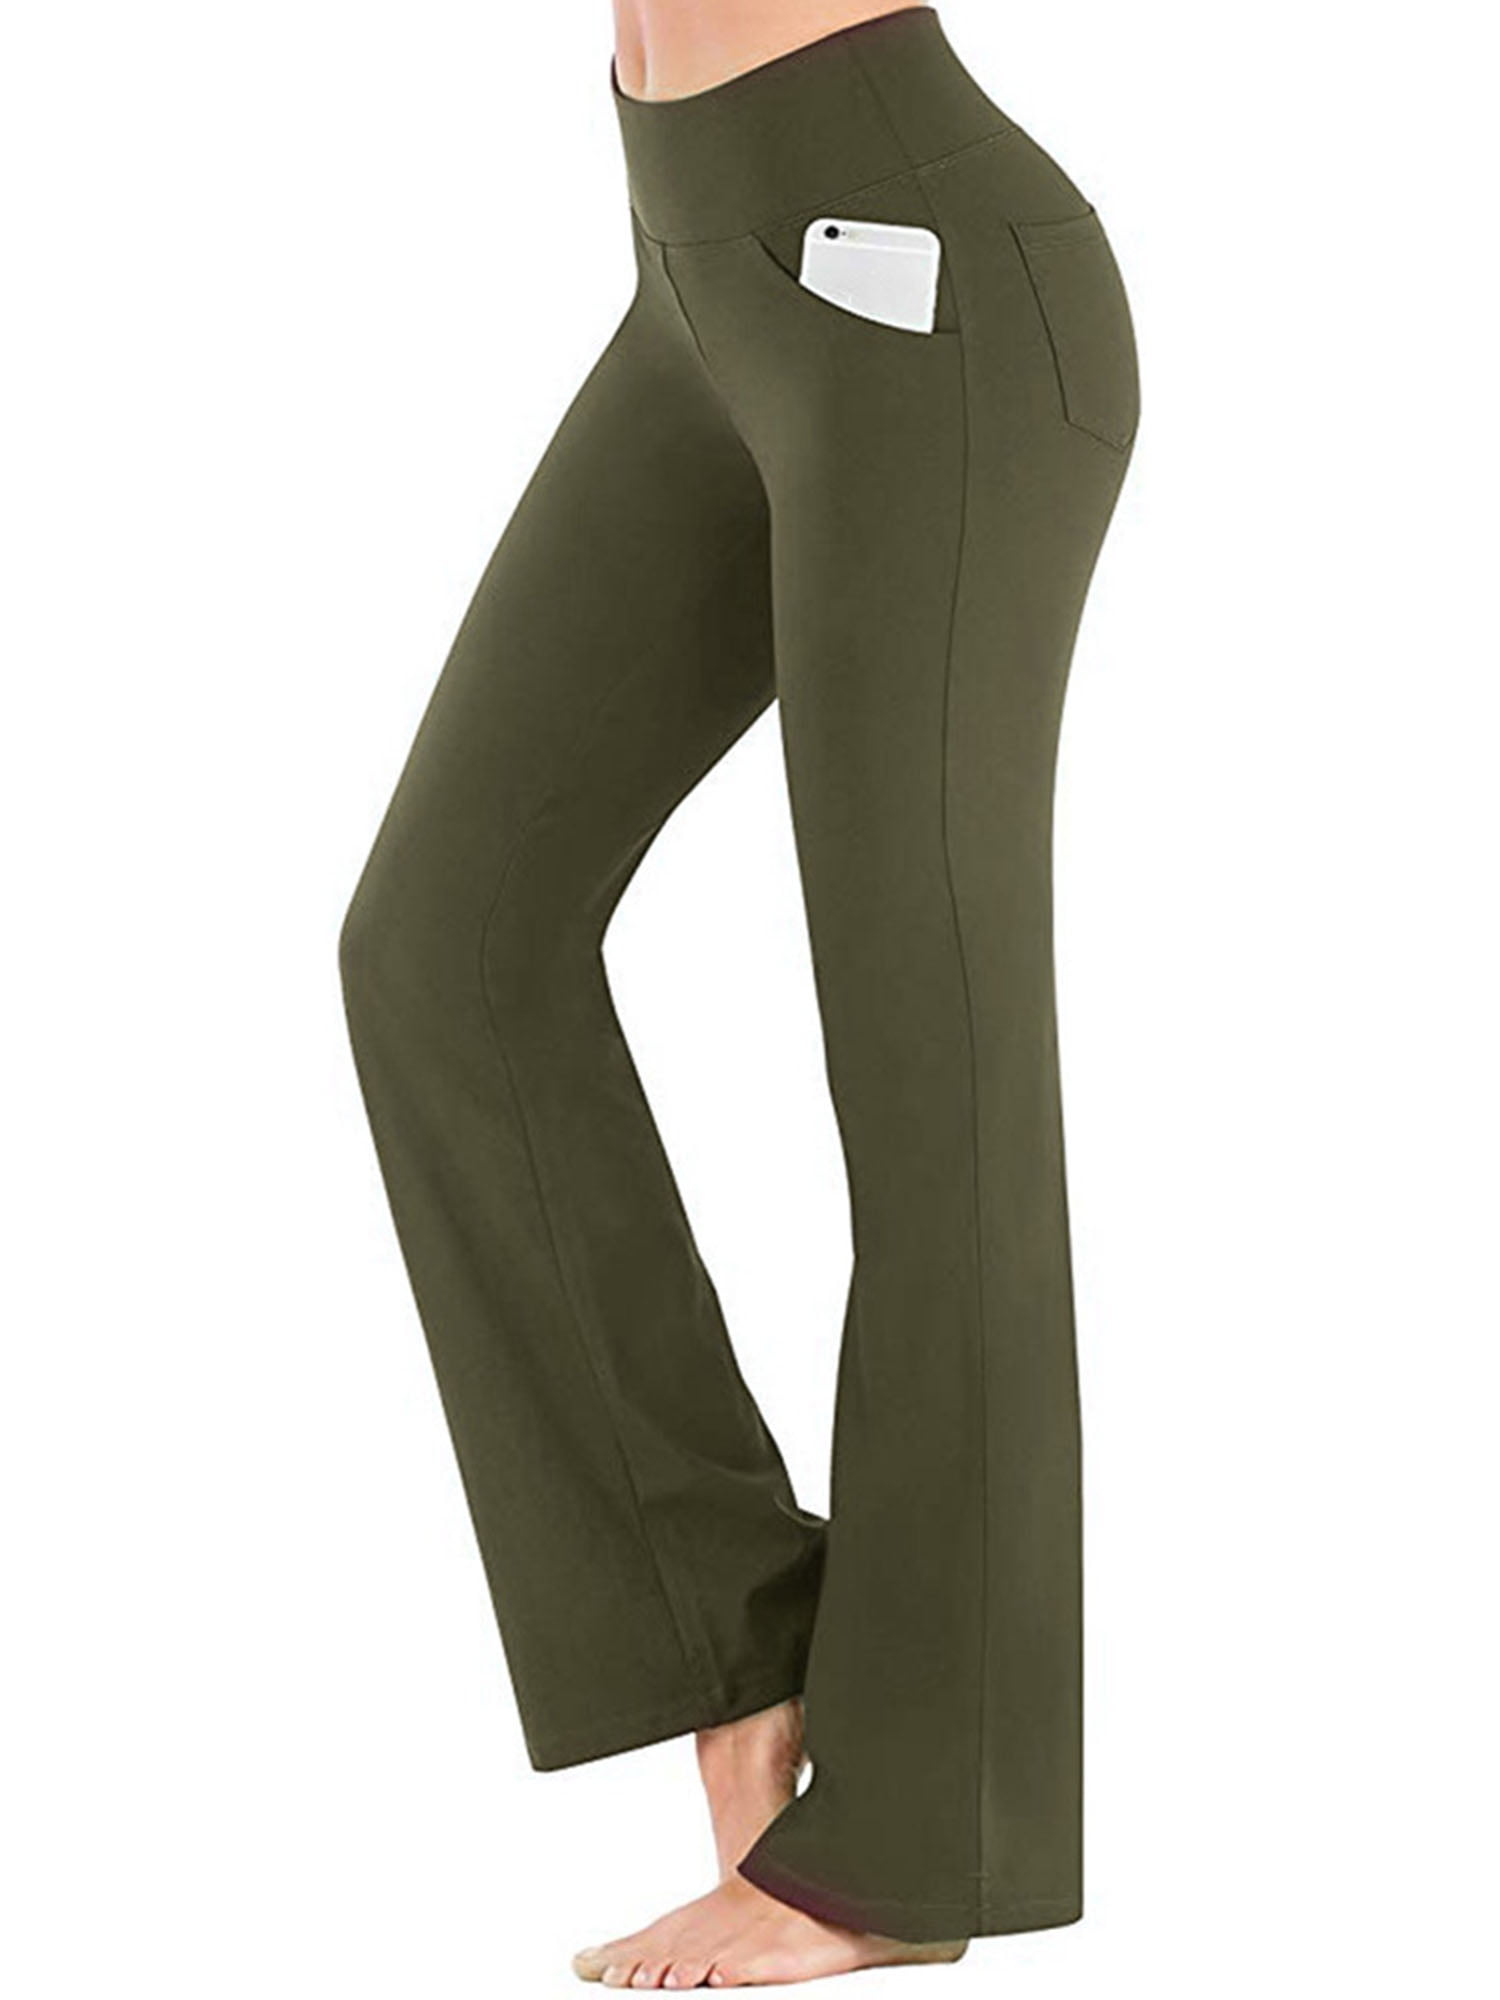 STARBILD Women High Waist Bootcut Yoga Pants with Pockets Elasticated Waist Trousers Casual Comfortable Jogging Bottoms 